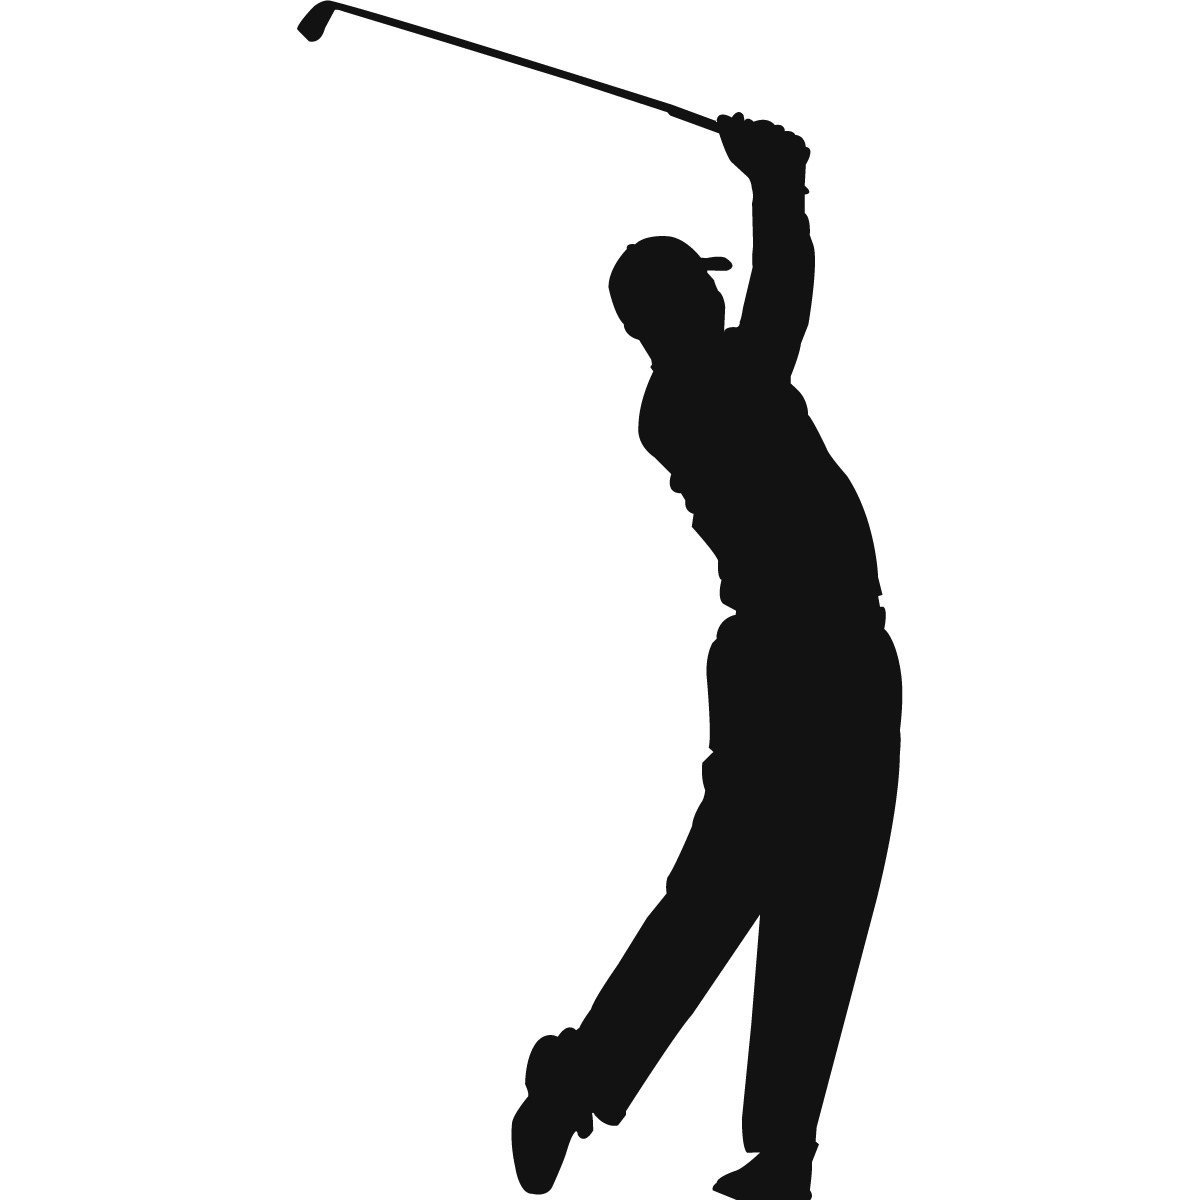 Golf Player Silhouette golf club silhouette clipart - clipart kid · Golf  PlayerTiger WoodsWall ClipartLook.com 